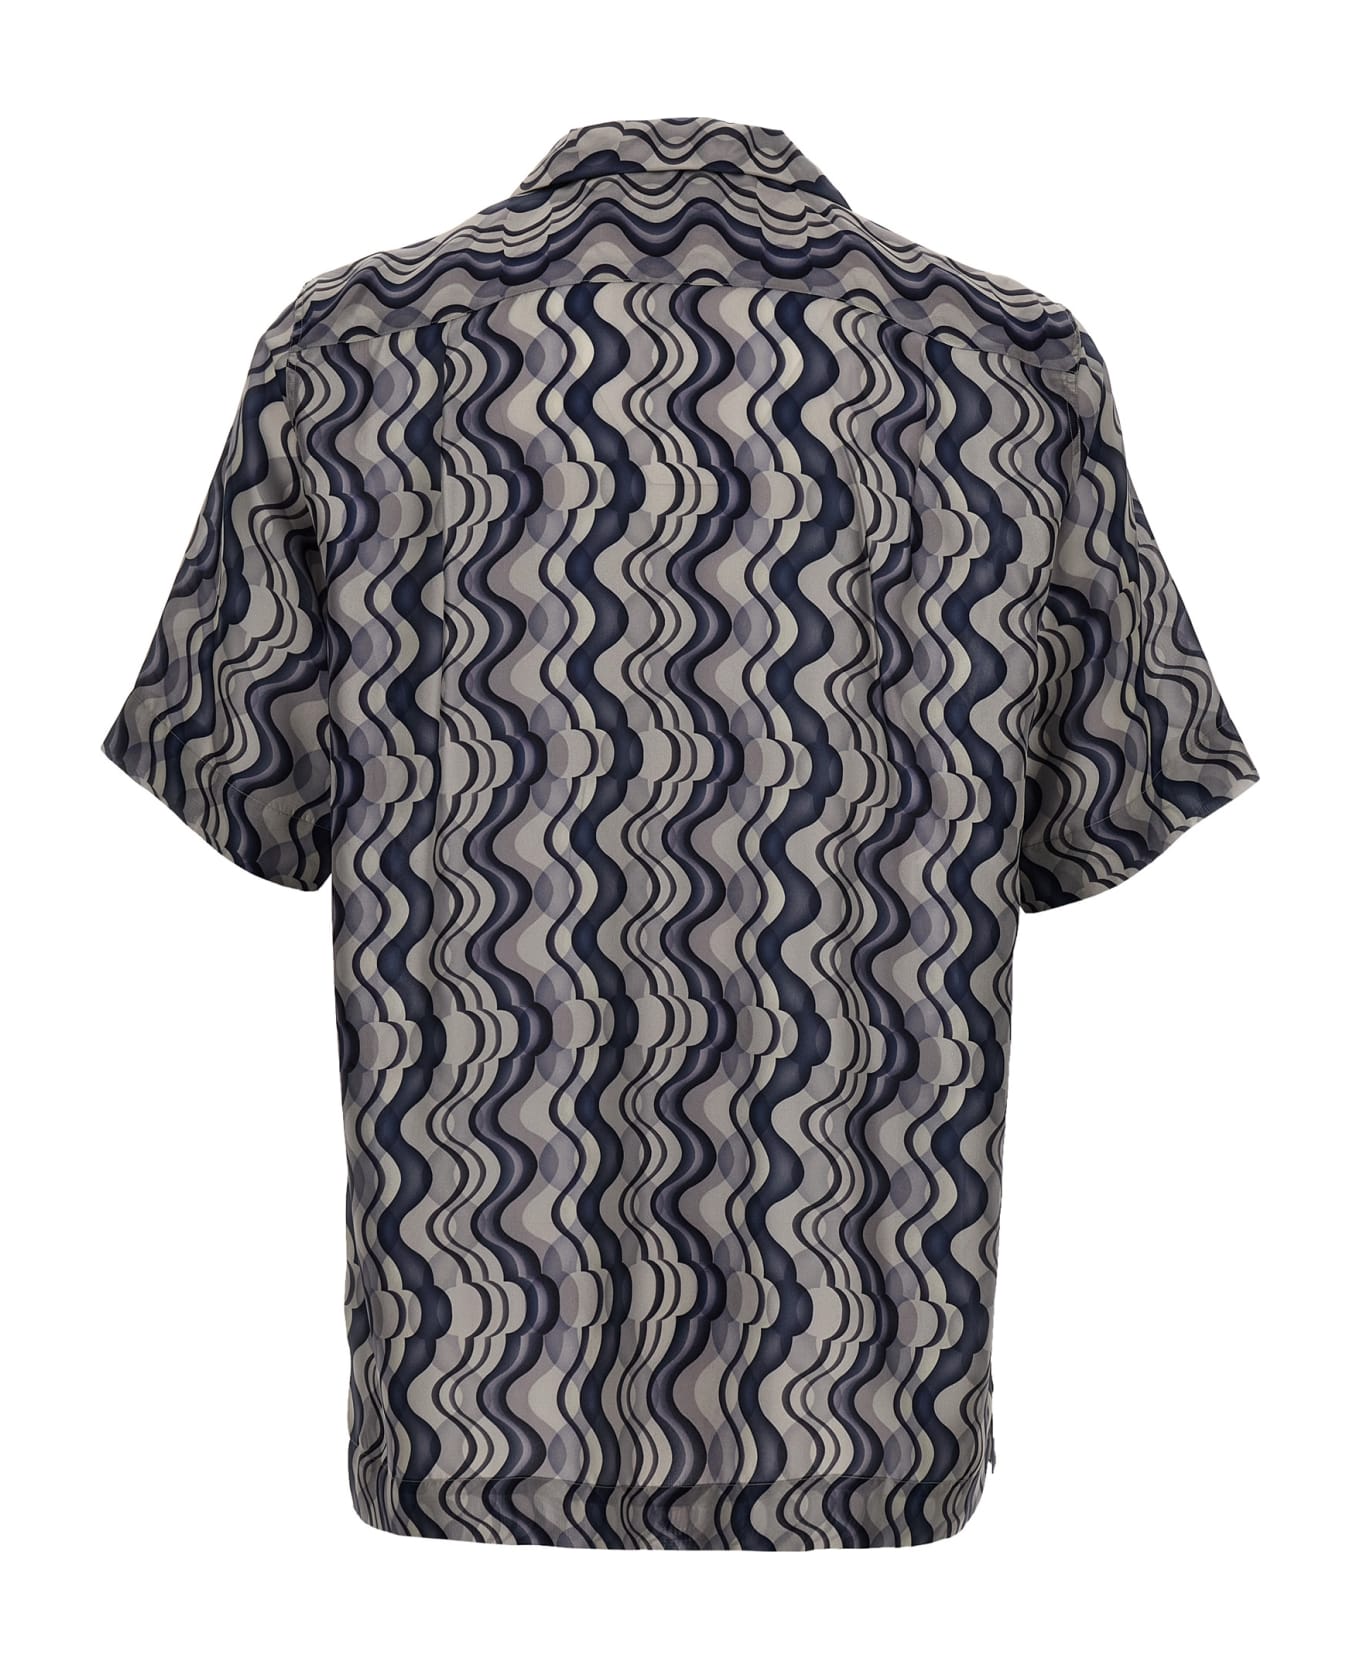 Dries Van Noten 'carltone' Shirt - Multicolor シャツ